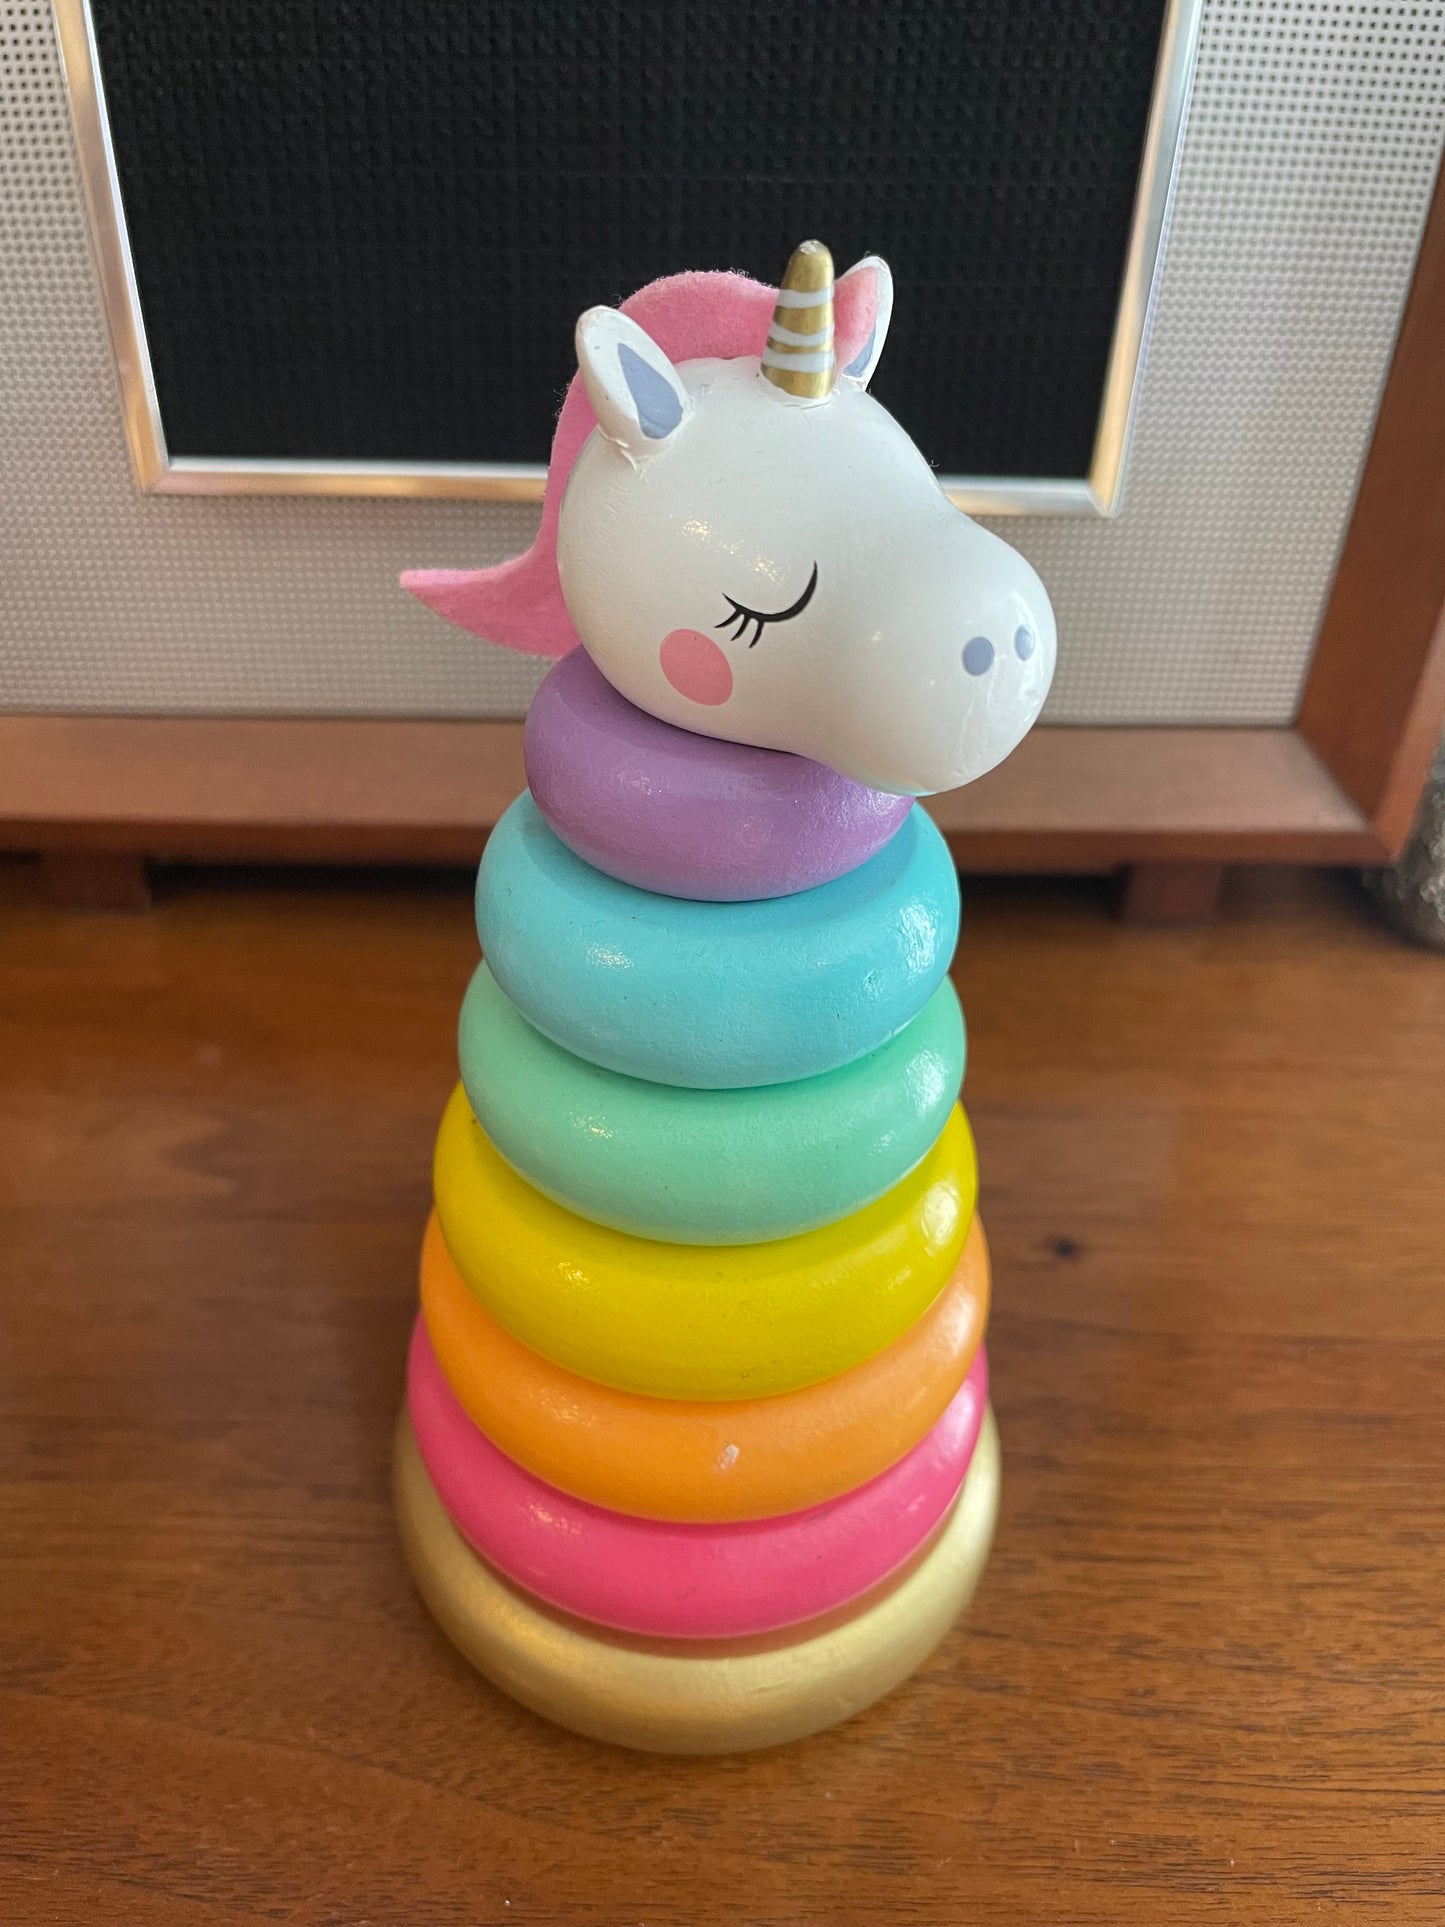 Wooden unicorn stacking toy